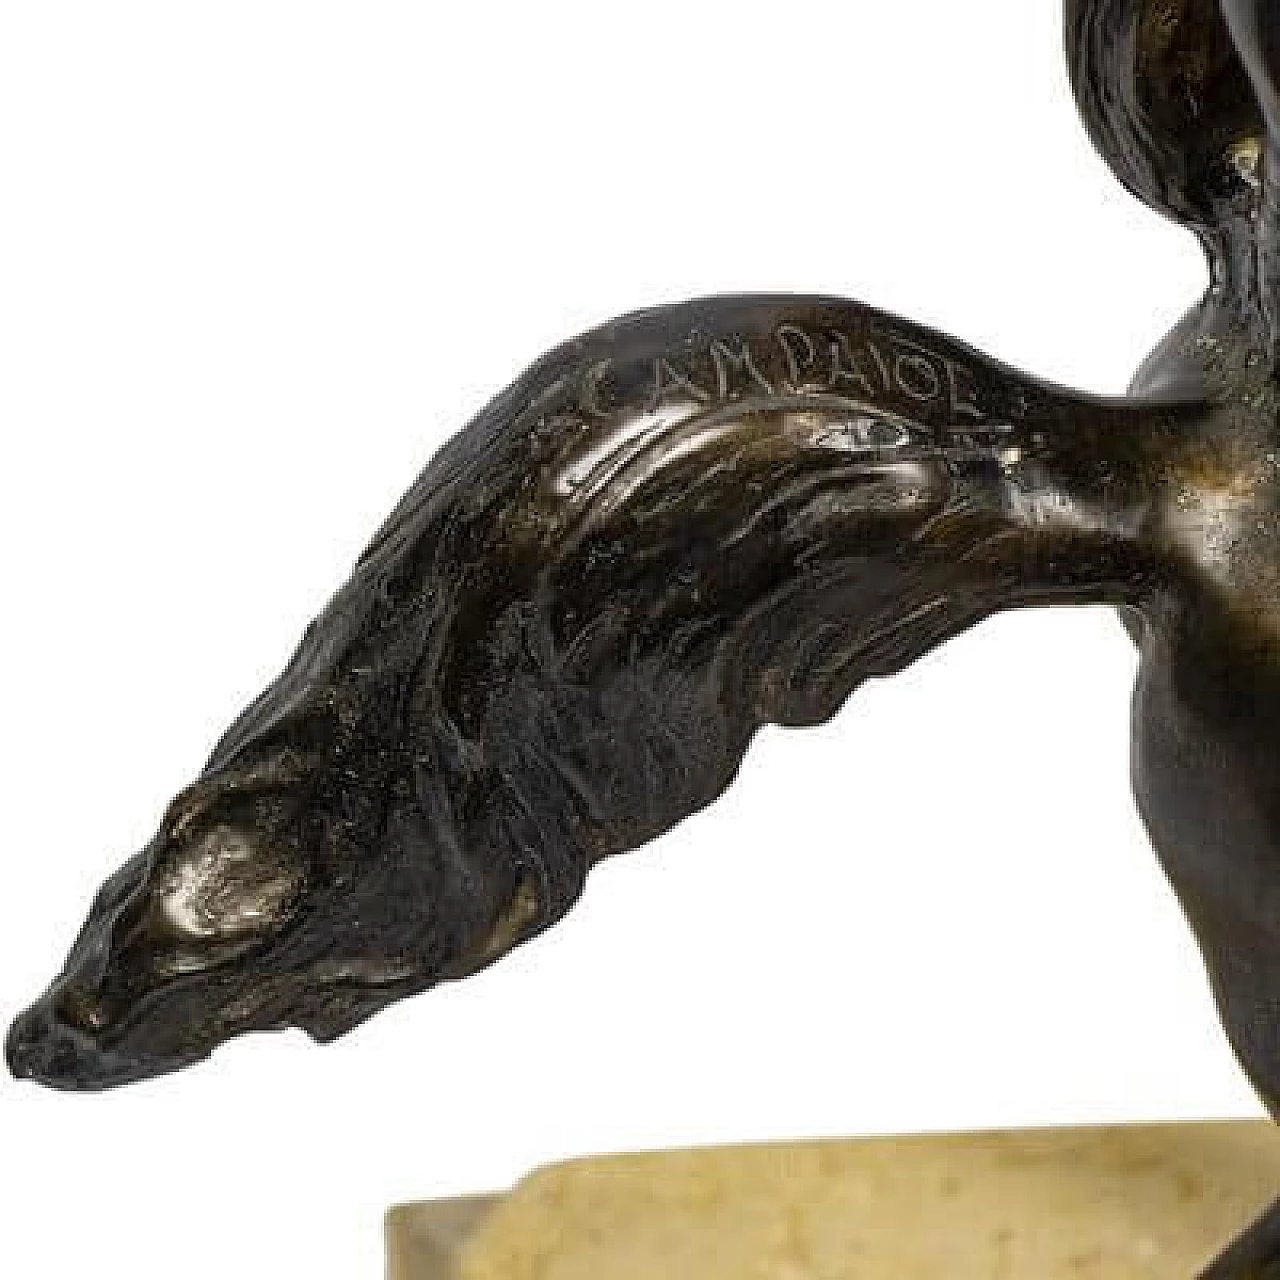 Indian warrior on horseback, reproduction after Tommaso Campajola, bronze sculpture 15